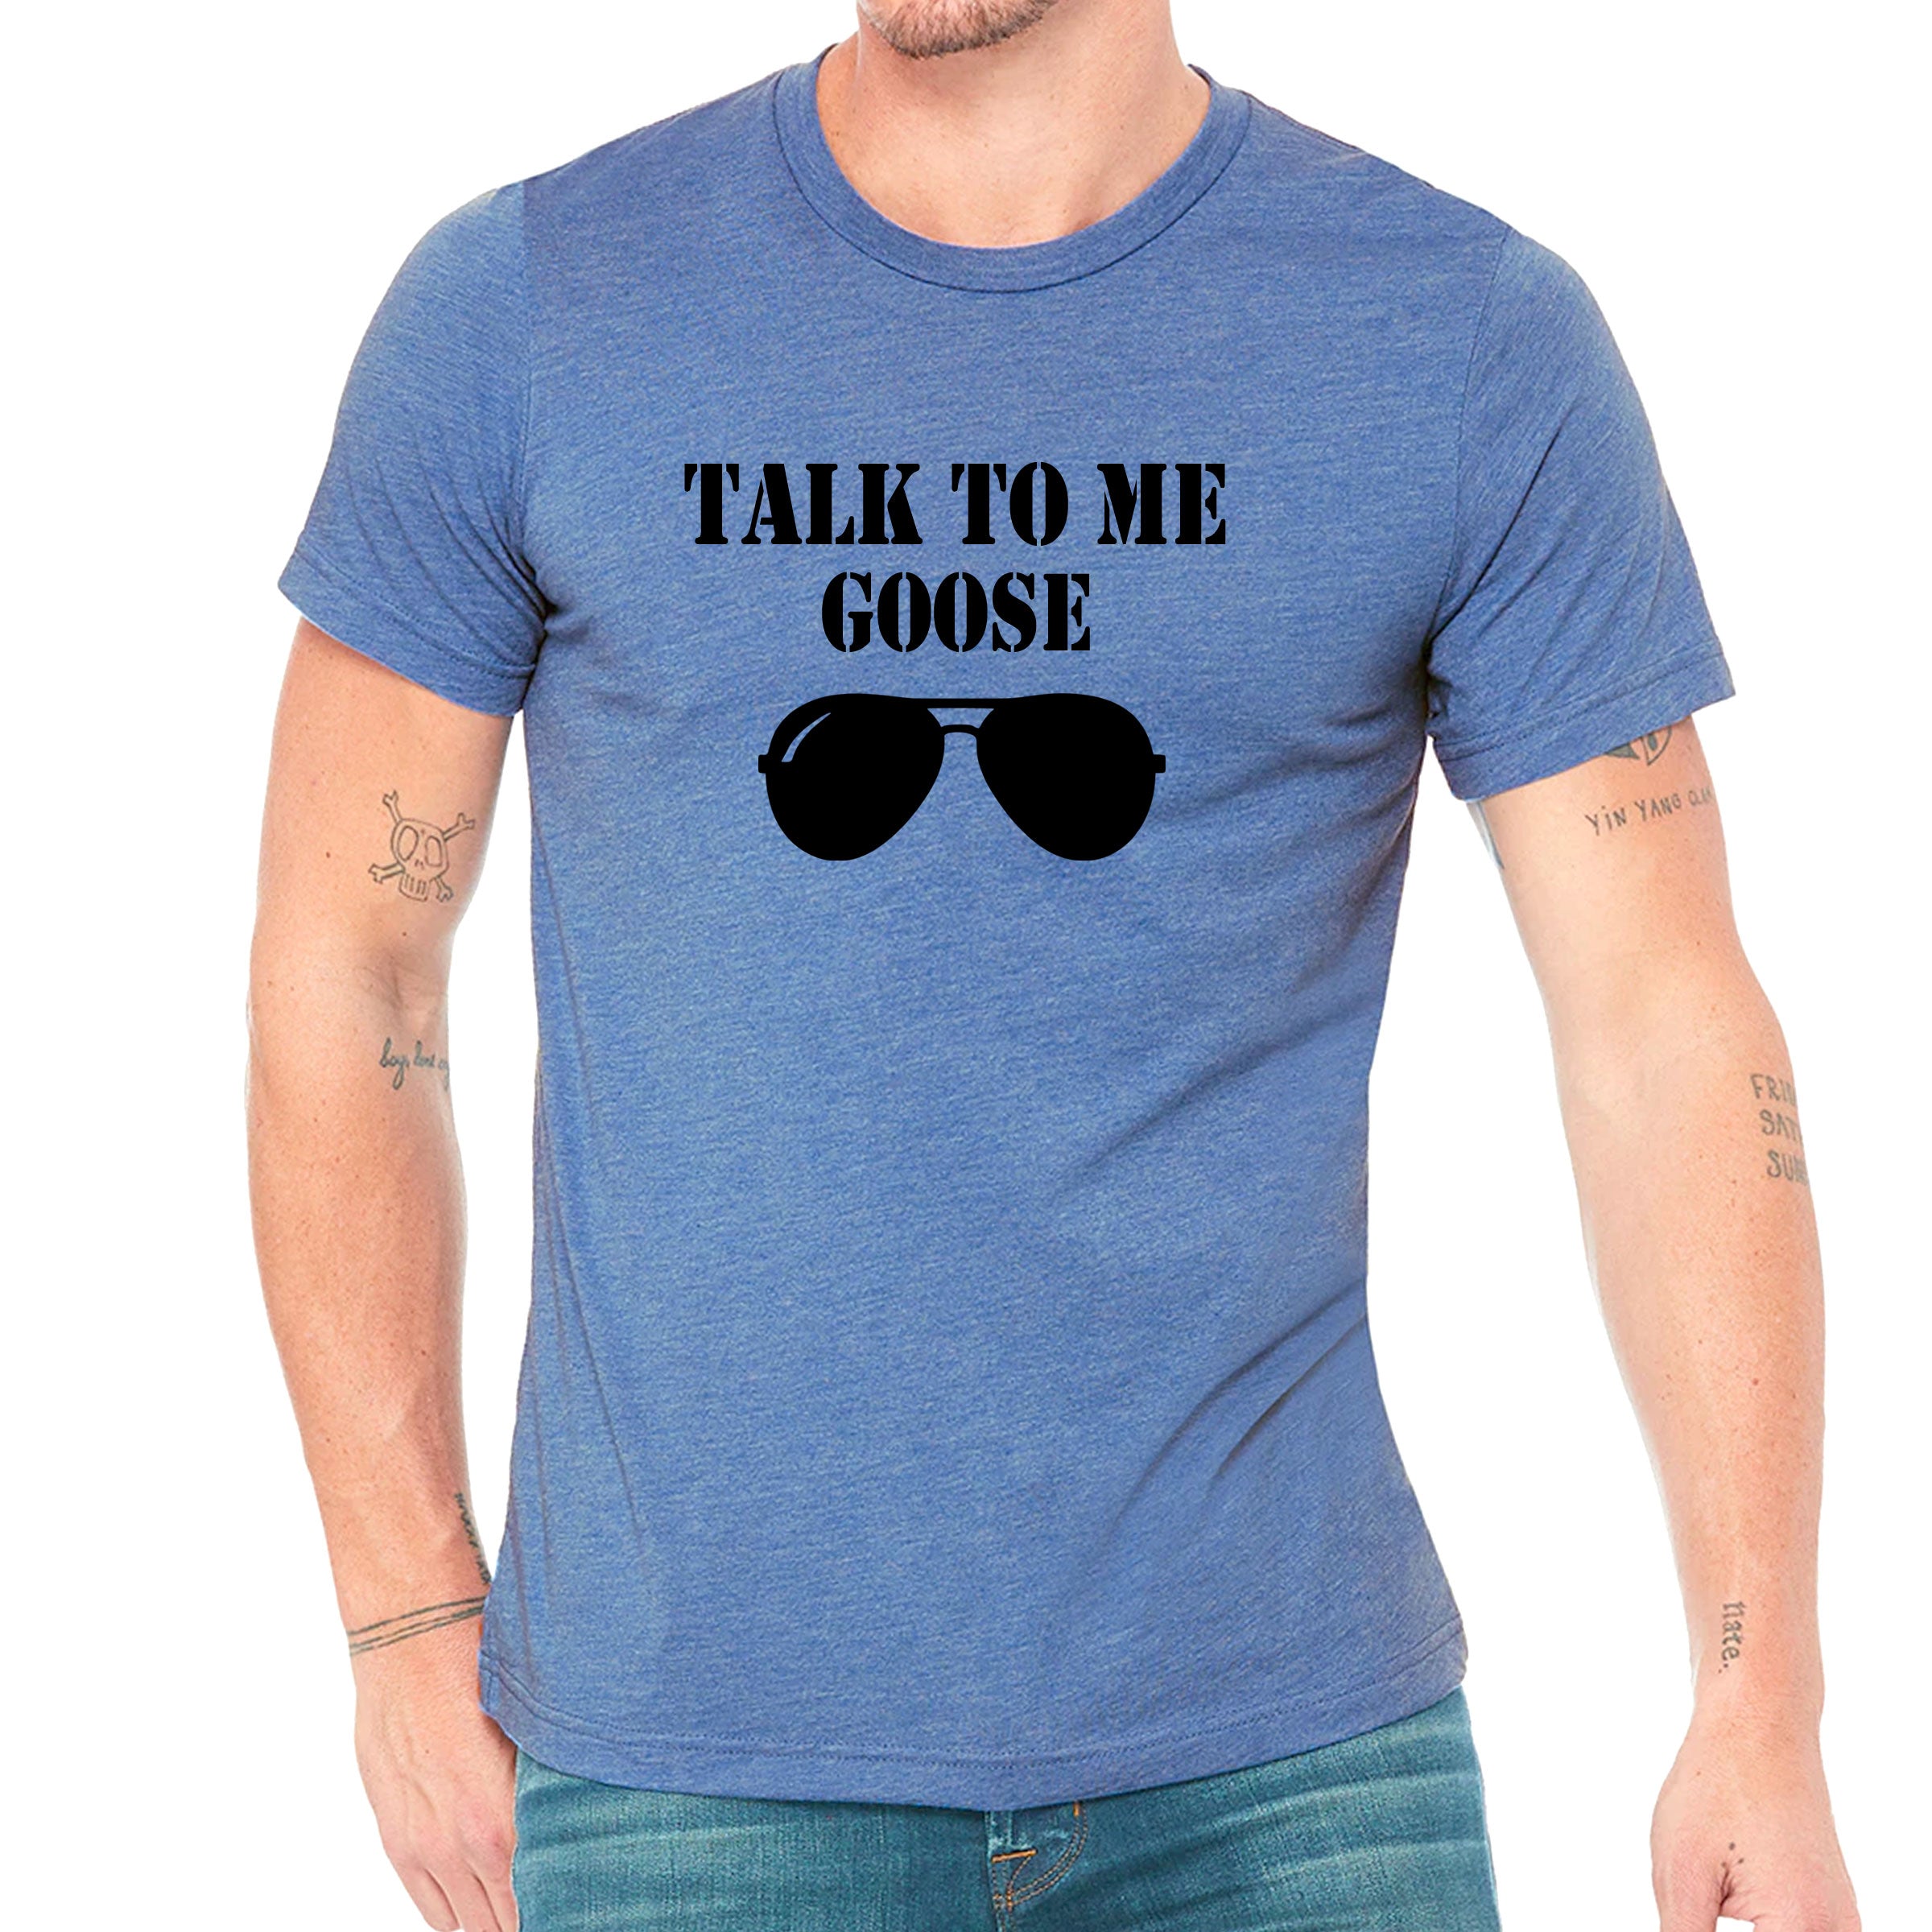 Top Gun: Maverick - Talk To Me Goose - Men's Short Sleeve Graphic